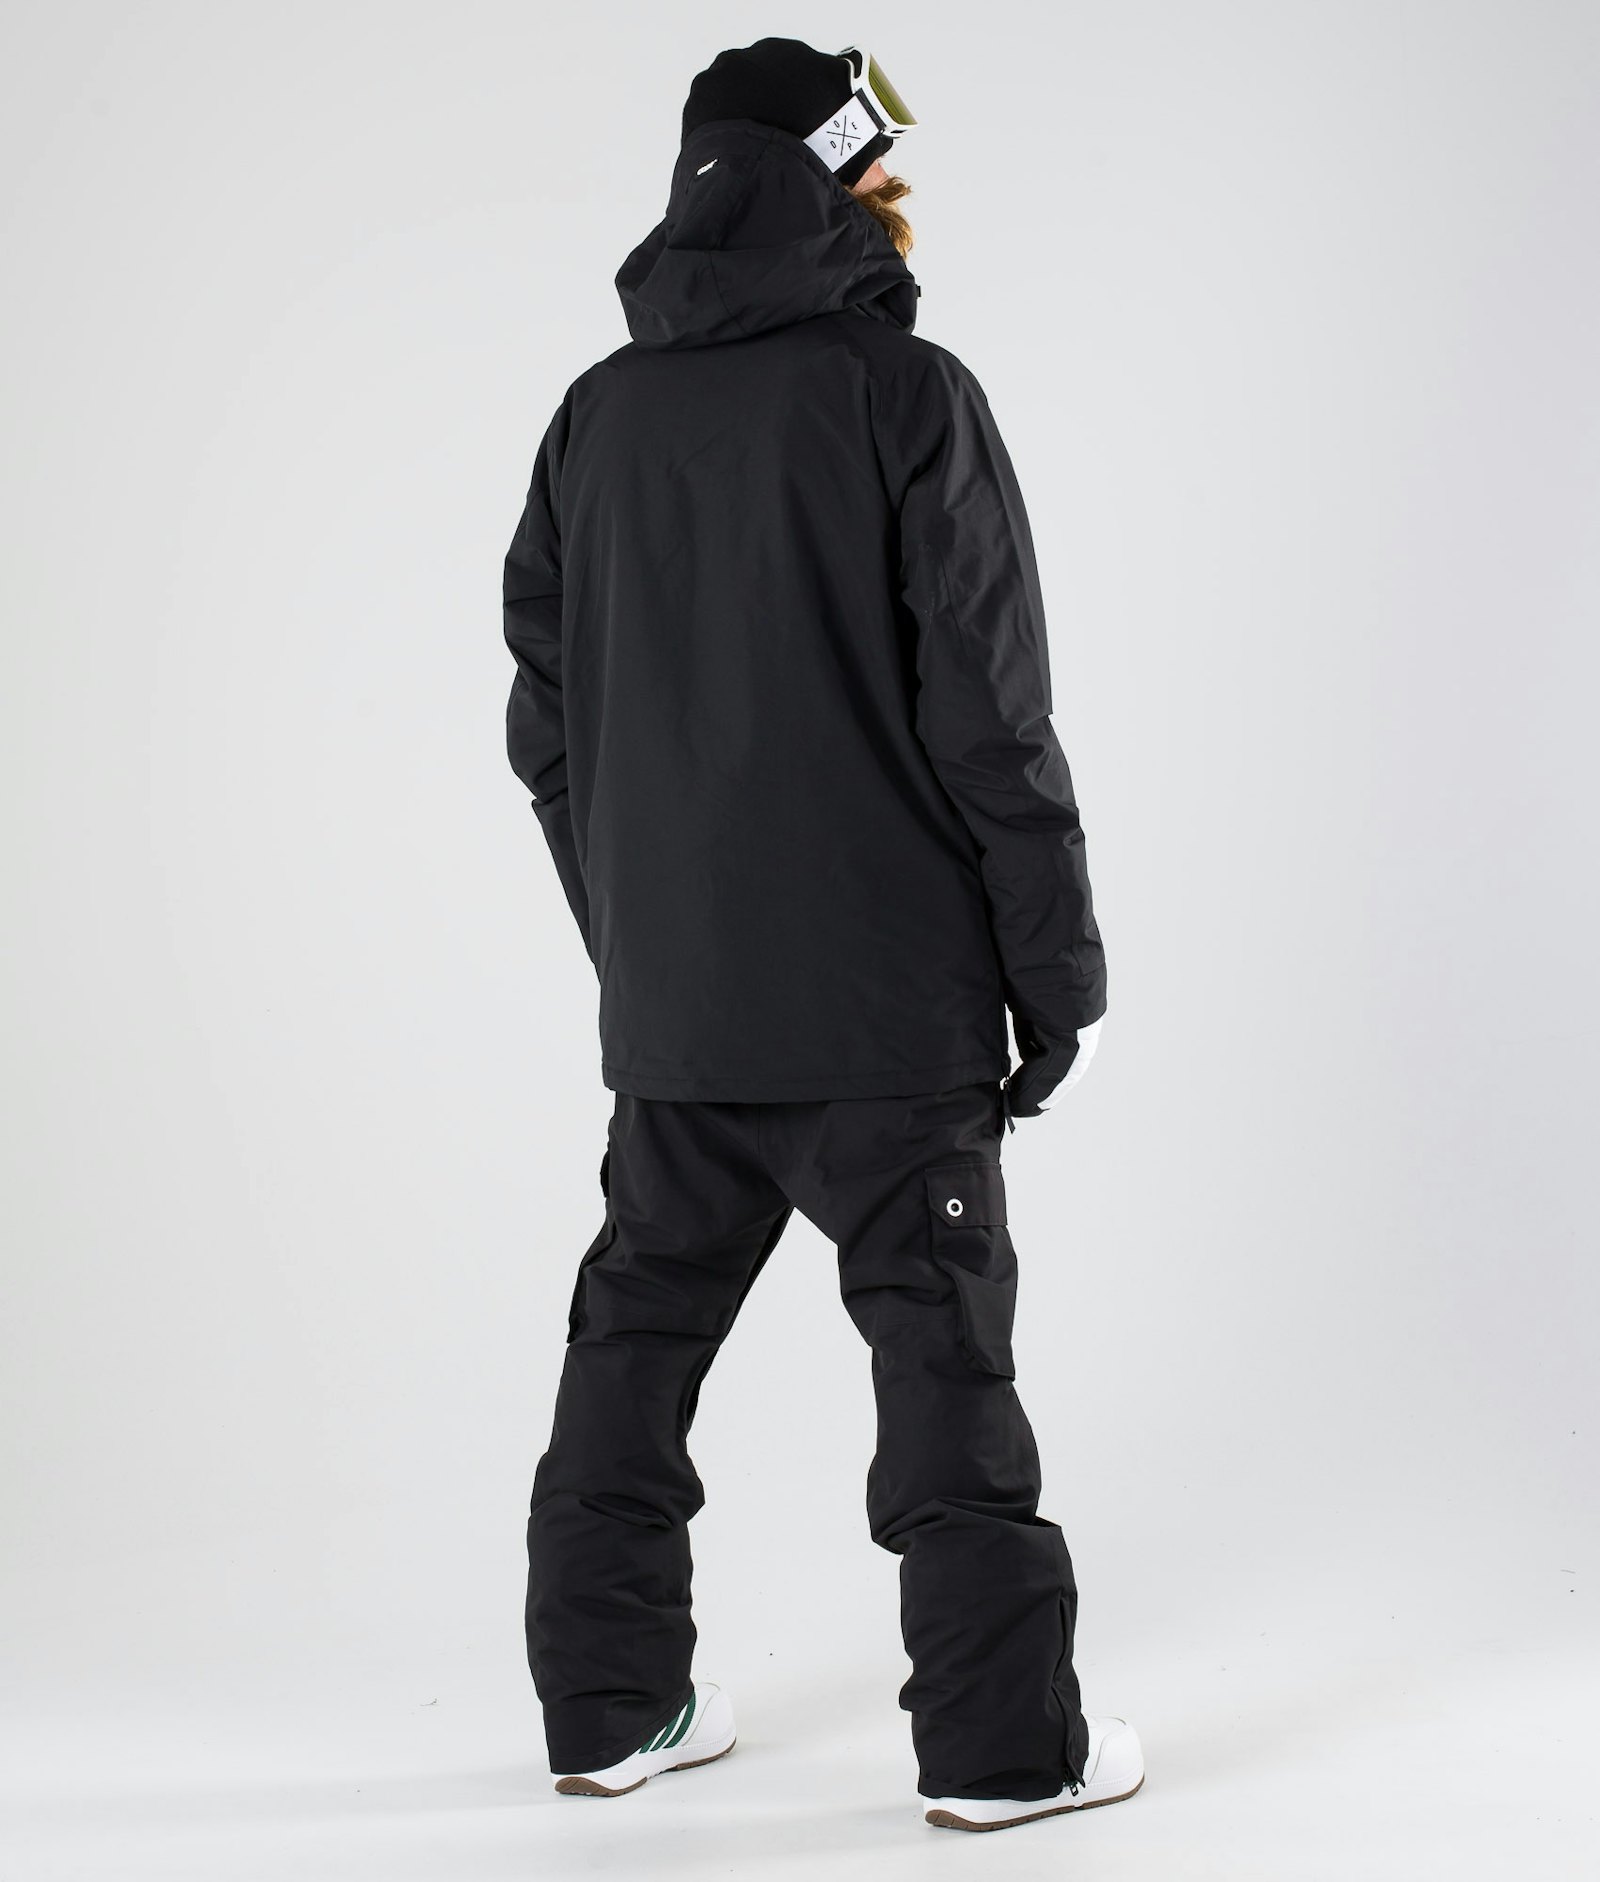 Annok 2019 Snowboard Jacket Men Black Renewed, Image 11 of 11